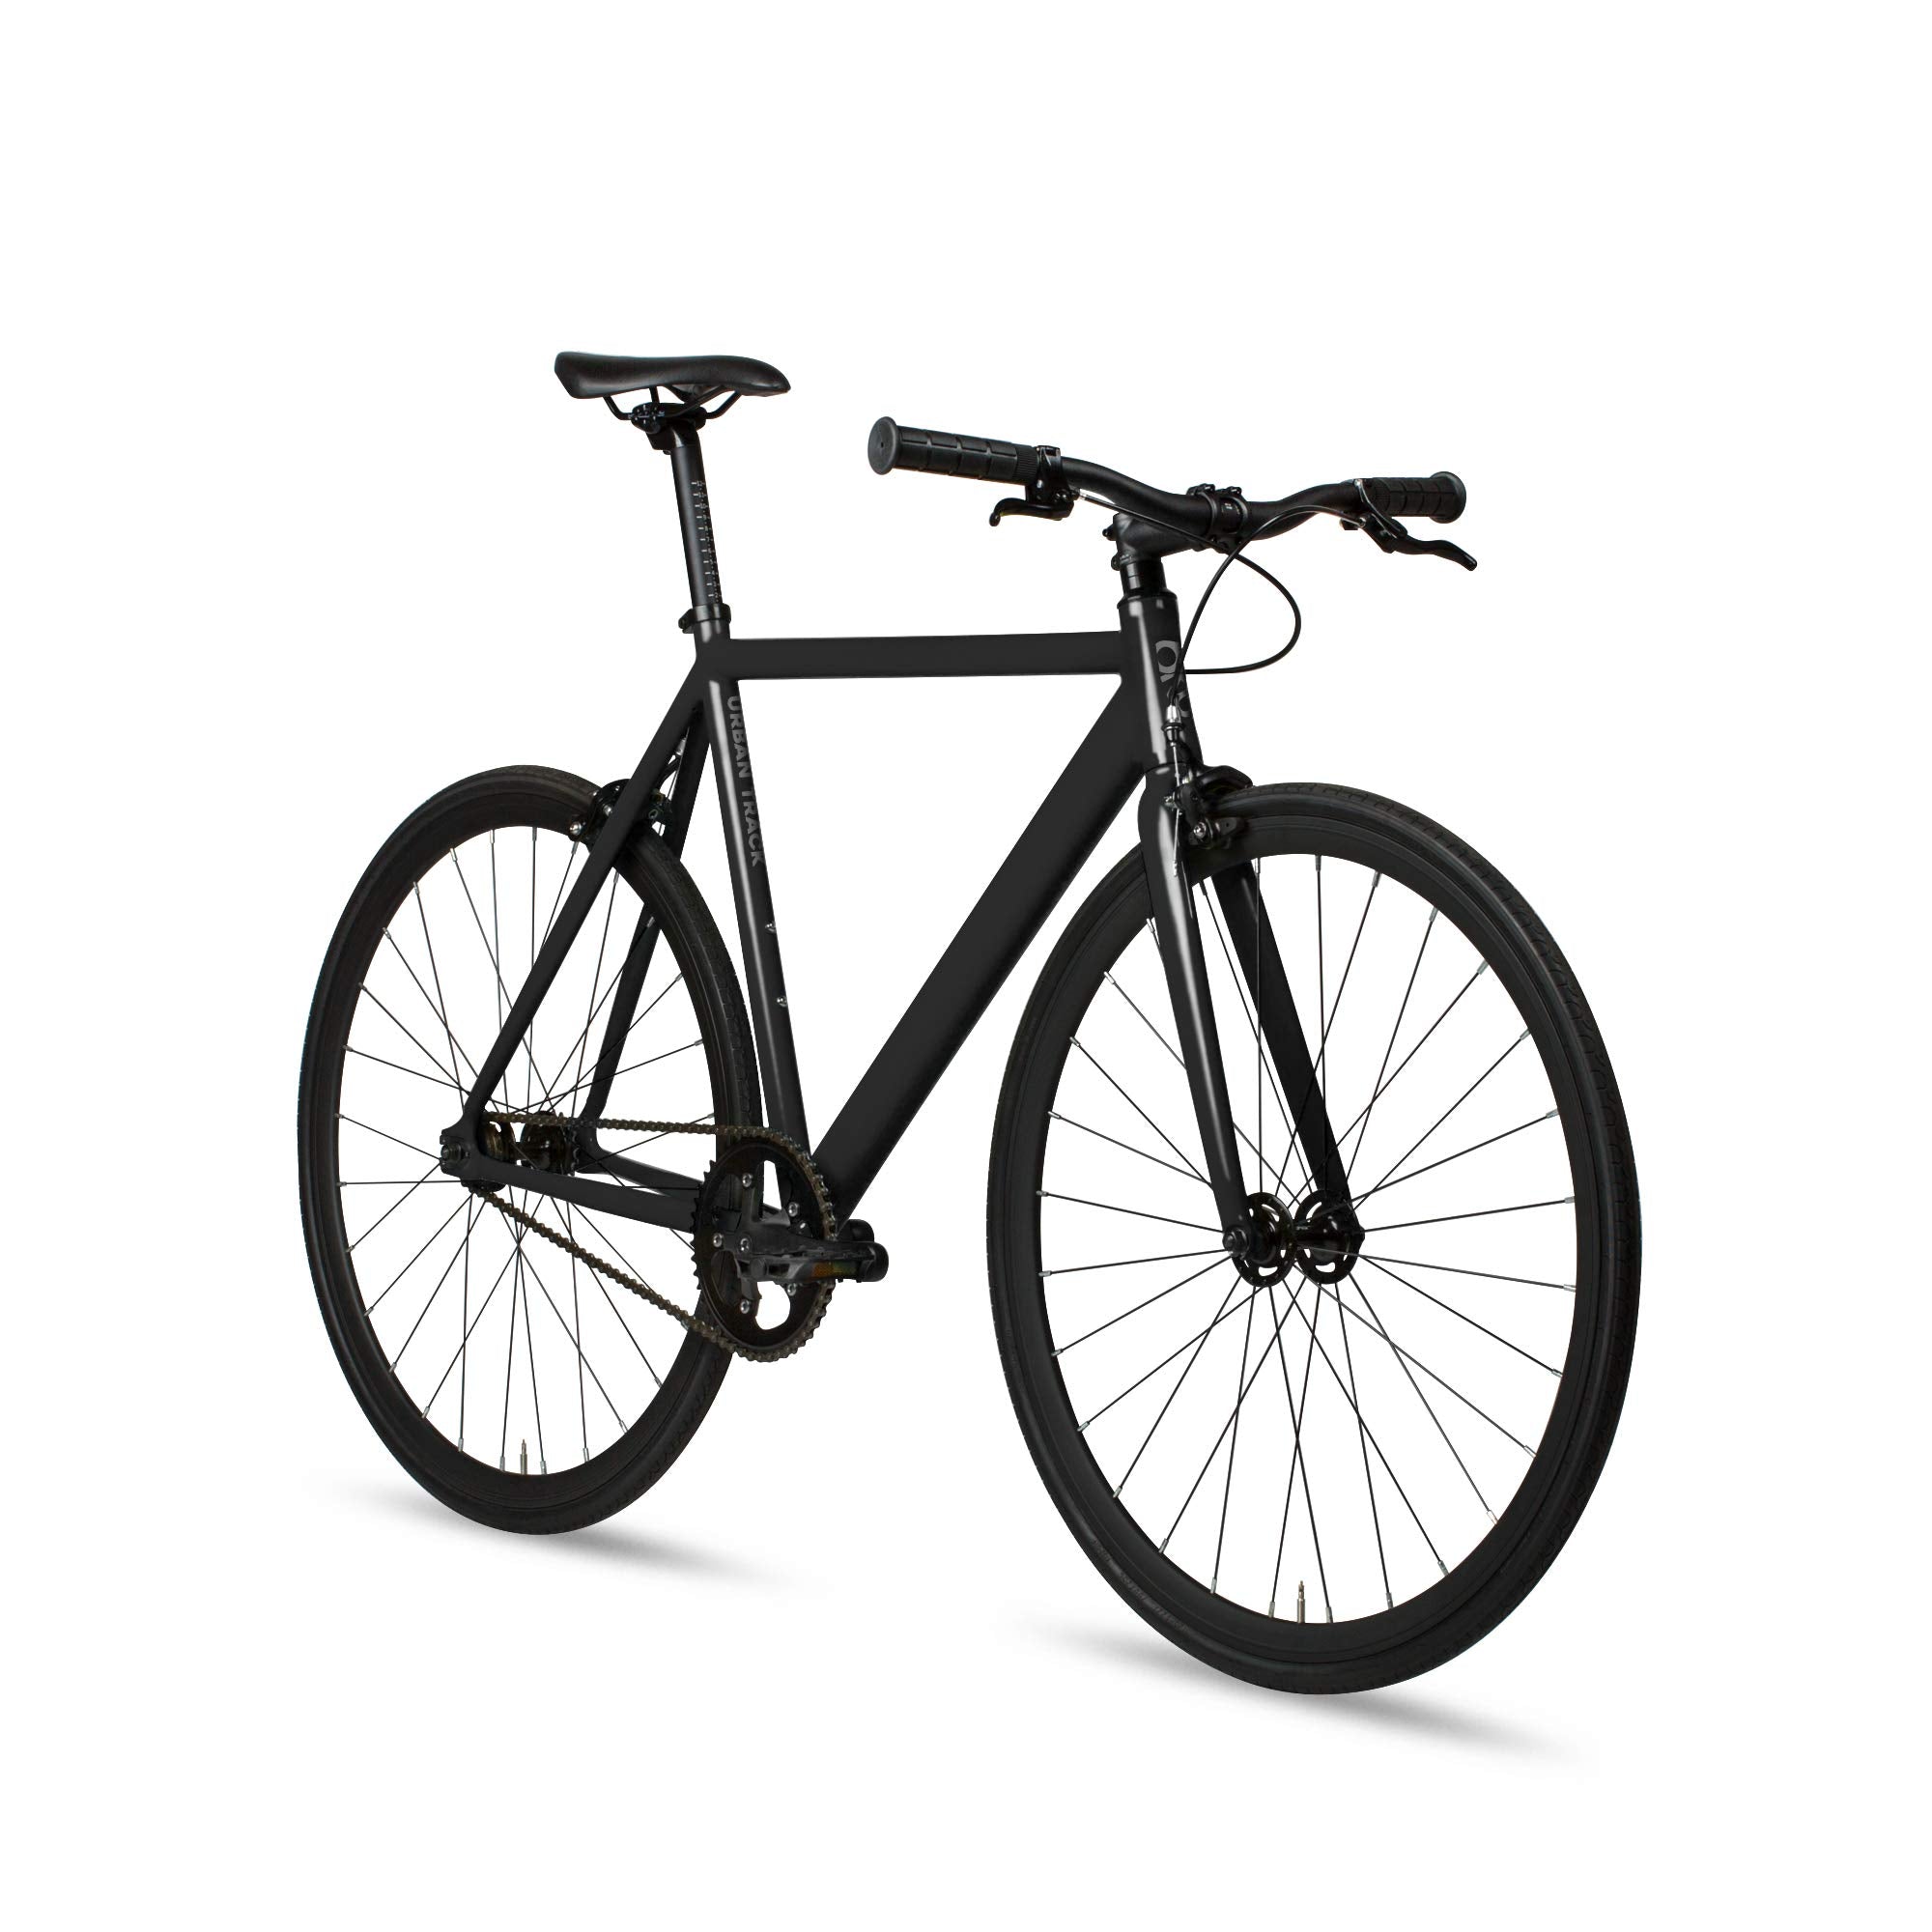 6KU Aluminium-Fixed-Gear-Einzelgeschwindigkeits-Fixie-Urban-Track-Bike, Schatten-Schwarz, 49cm/XS